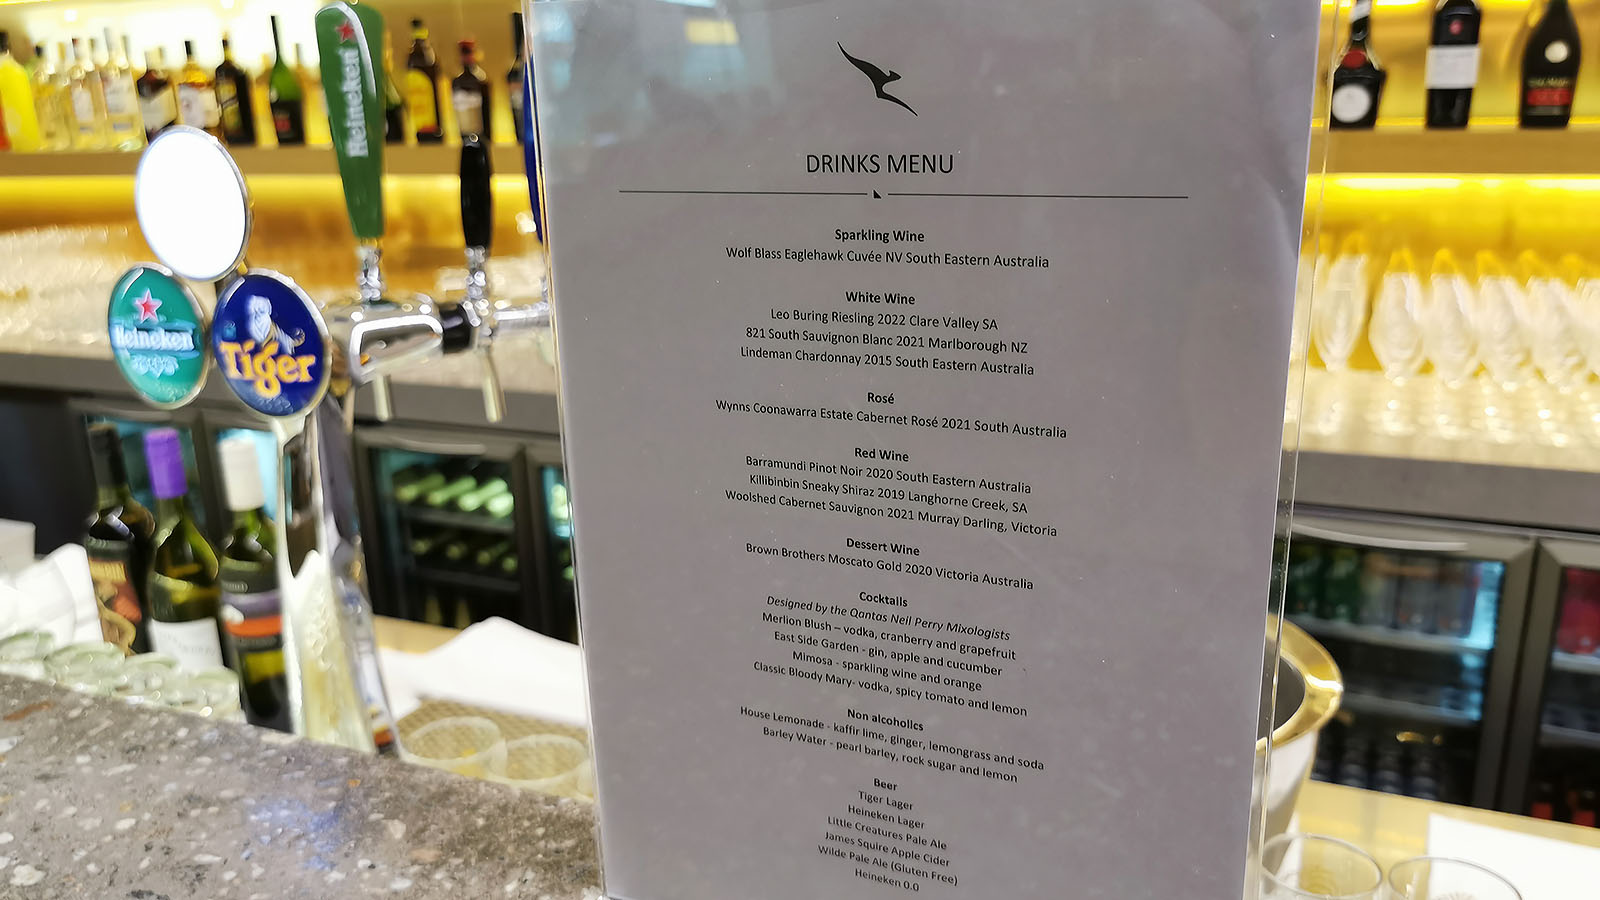 Beverage menu at the Qantas International Business Lounge in Singapore